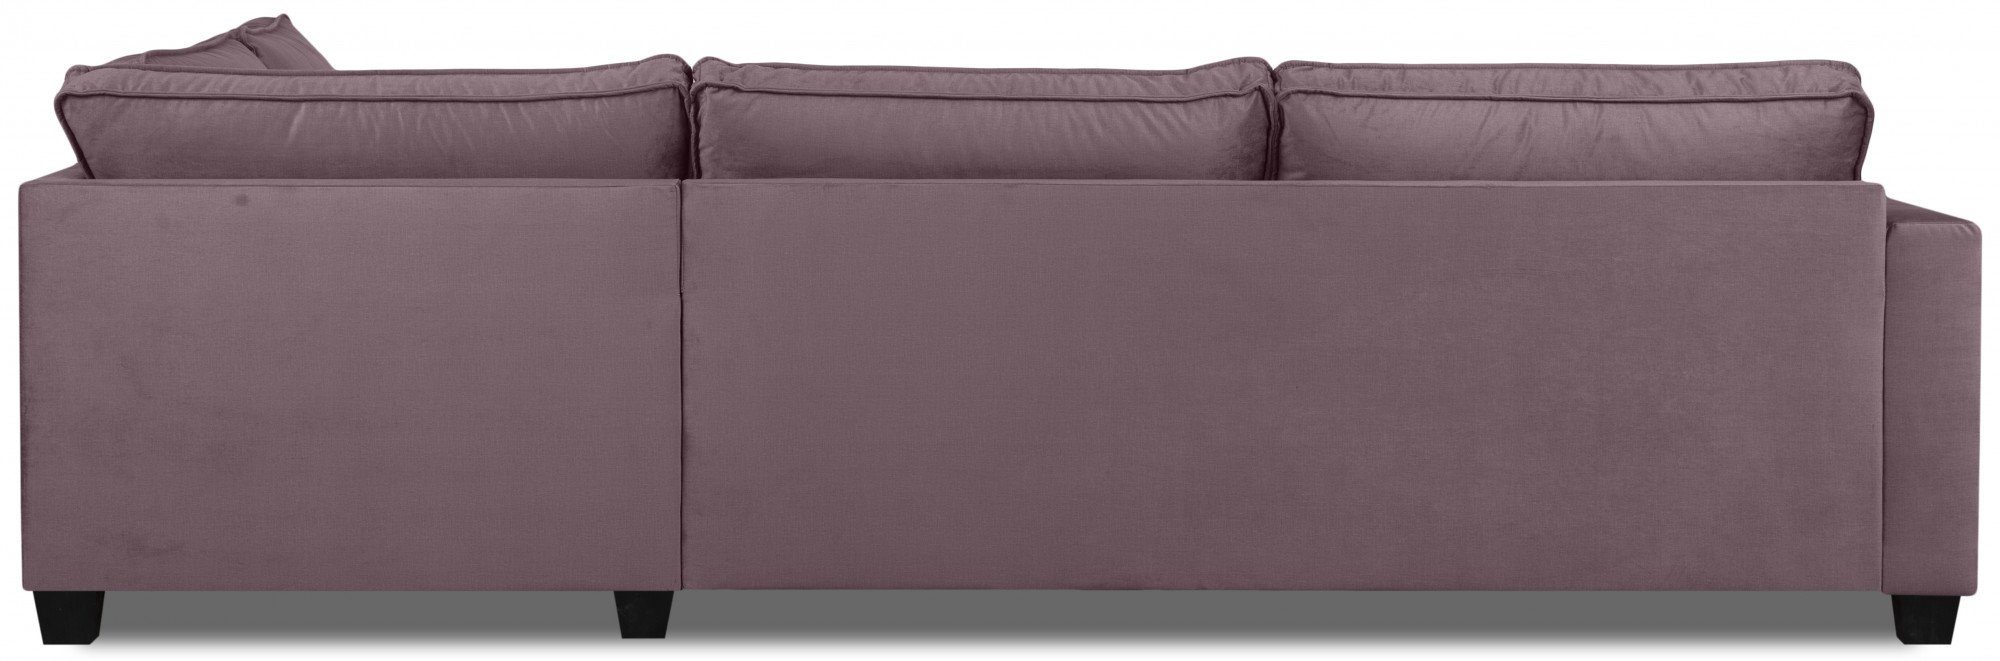 bequeme Farben Tilques, affaire Home violet viele Sitzgelegenheiten, pink verfügbar Ecksofa